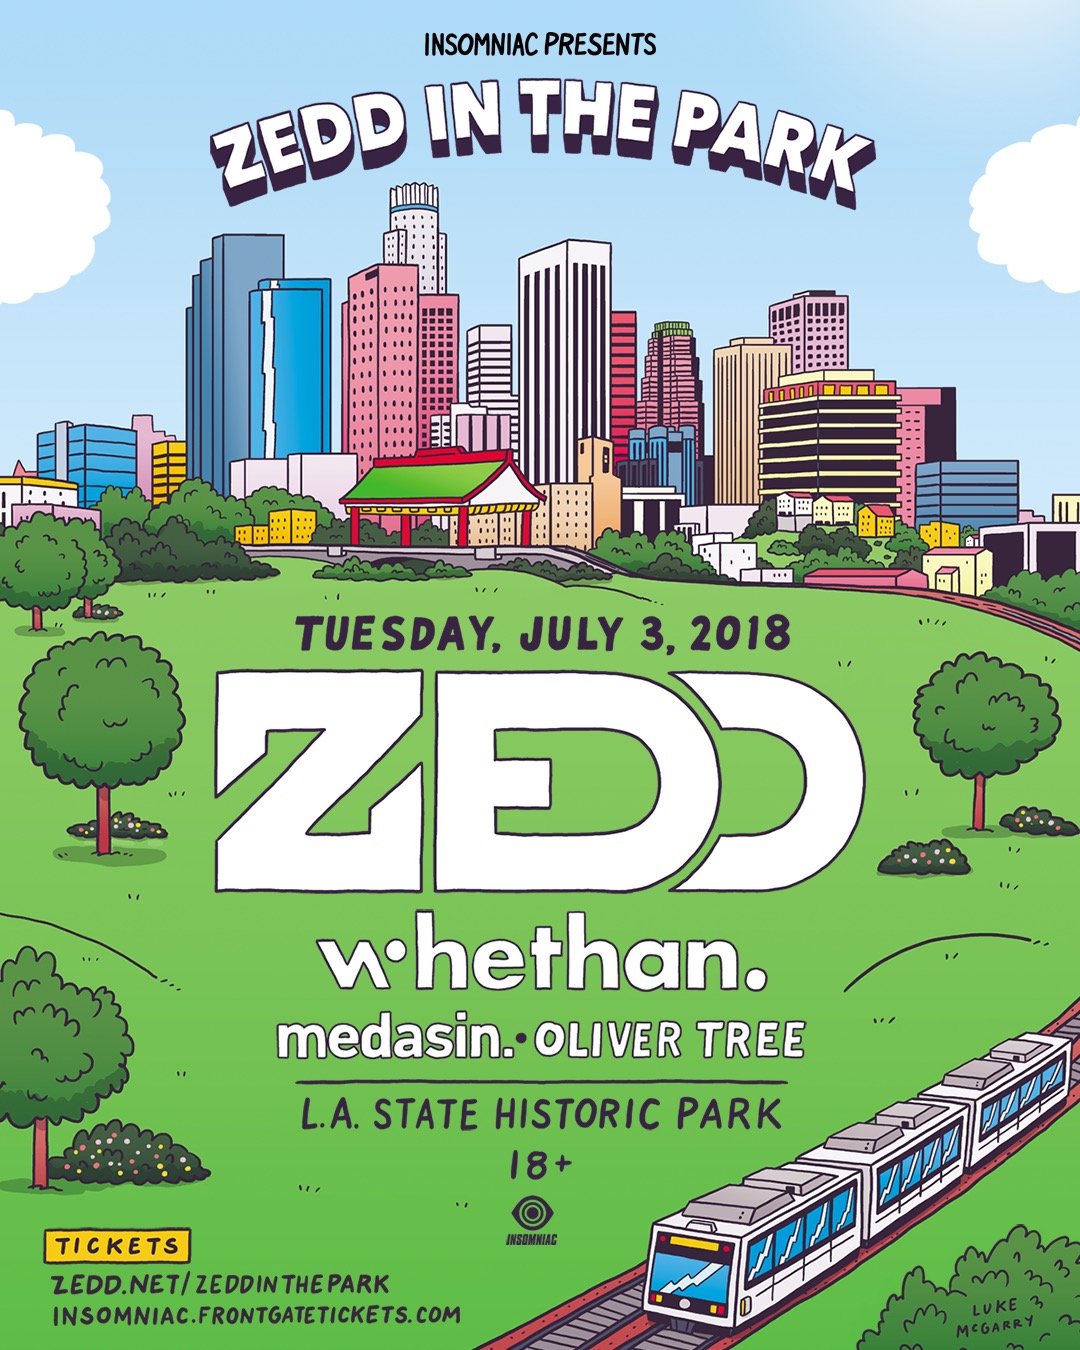 Zedd In The Park 2018